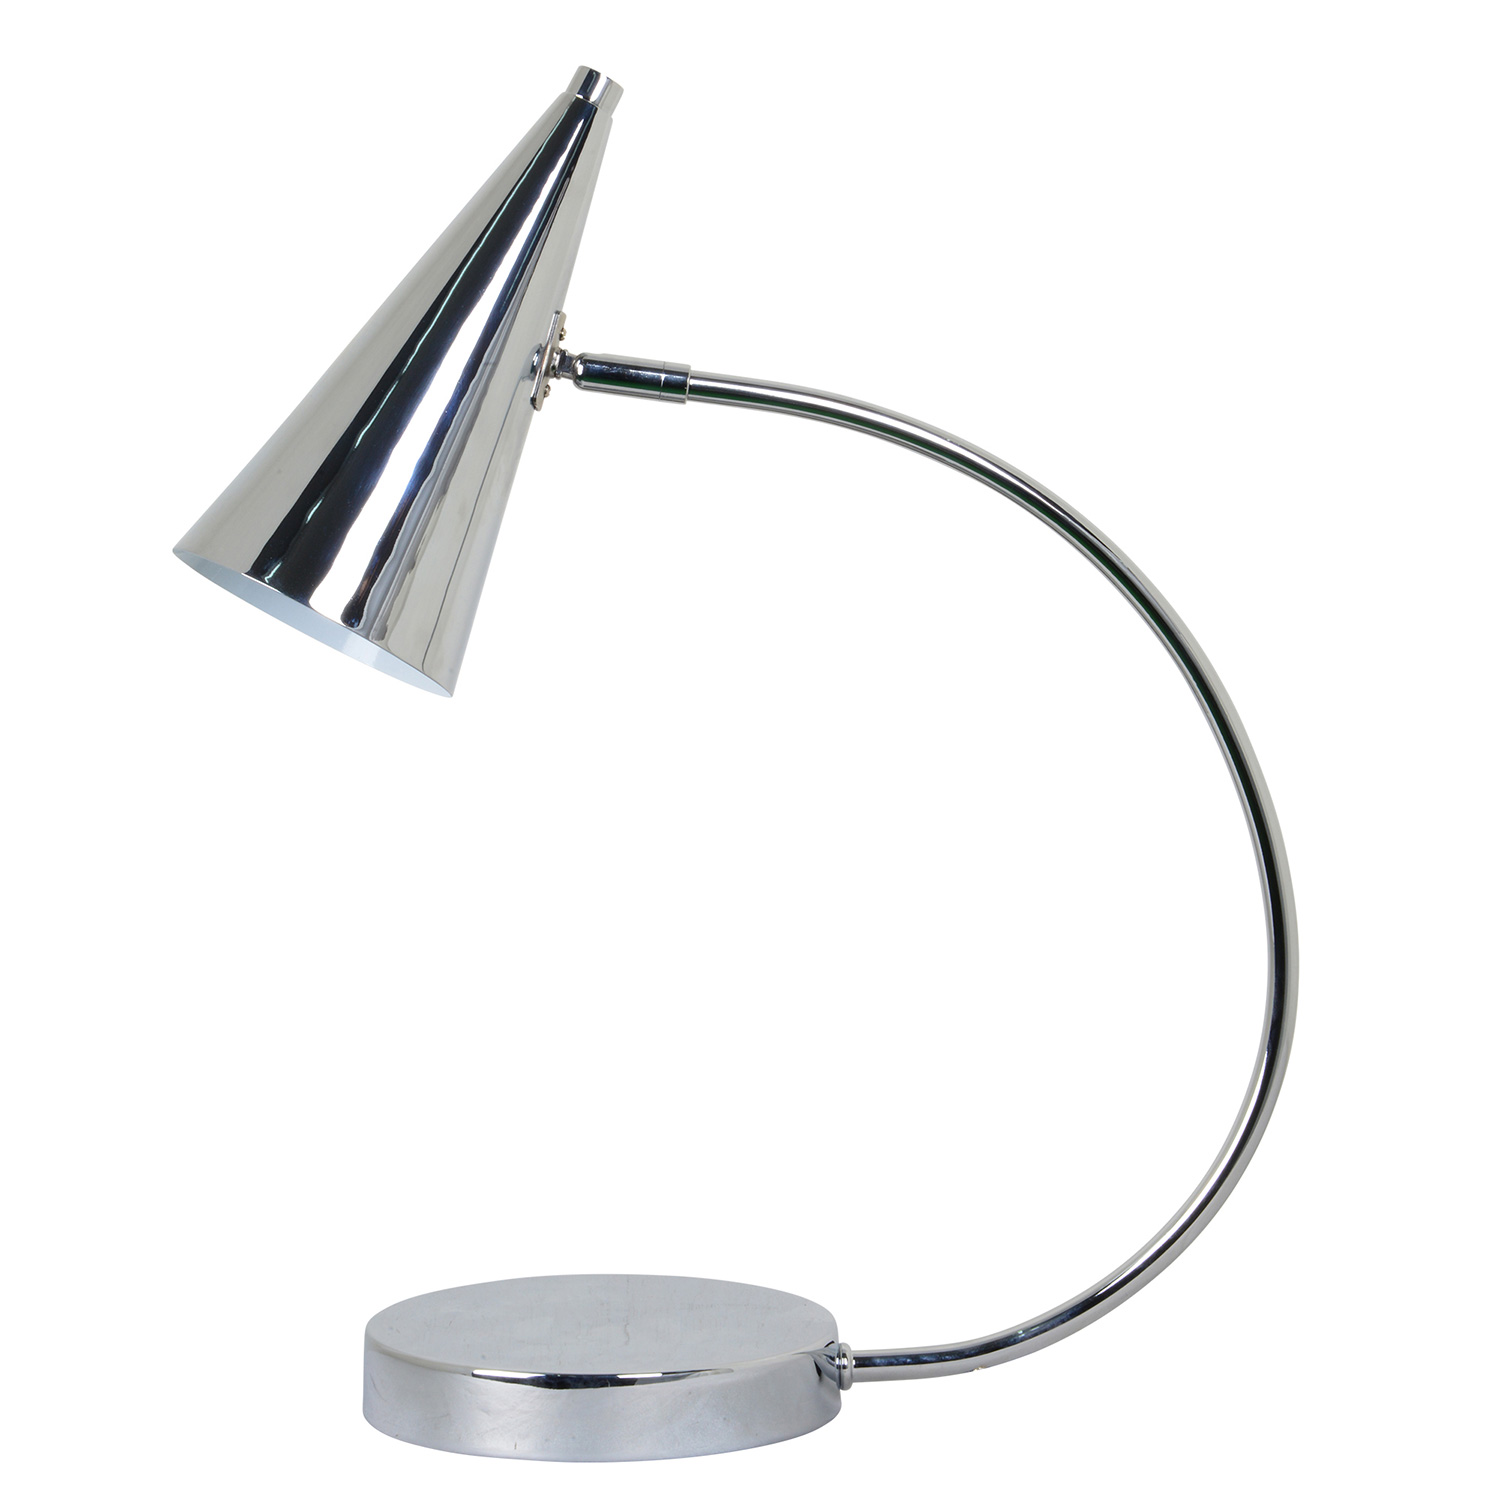 Ren-Wil Brace Table Lamp - Chrome